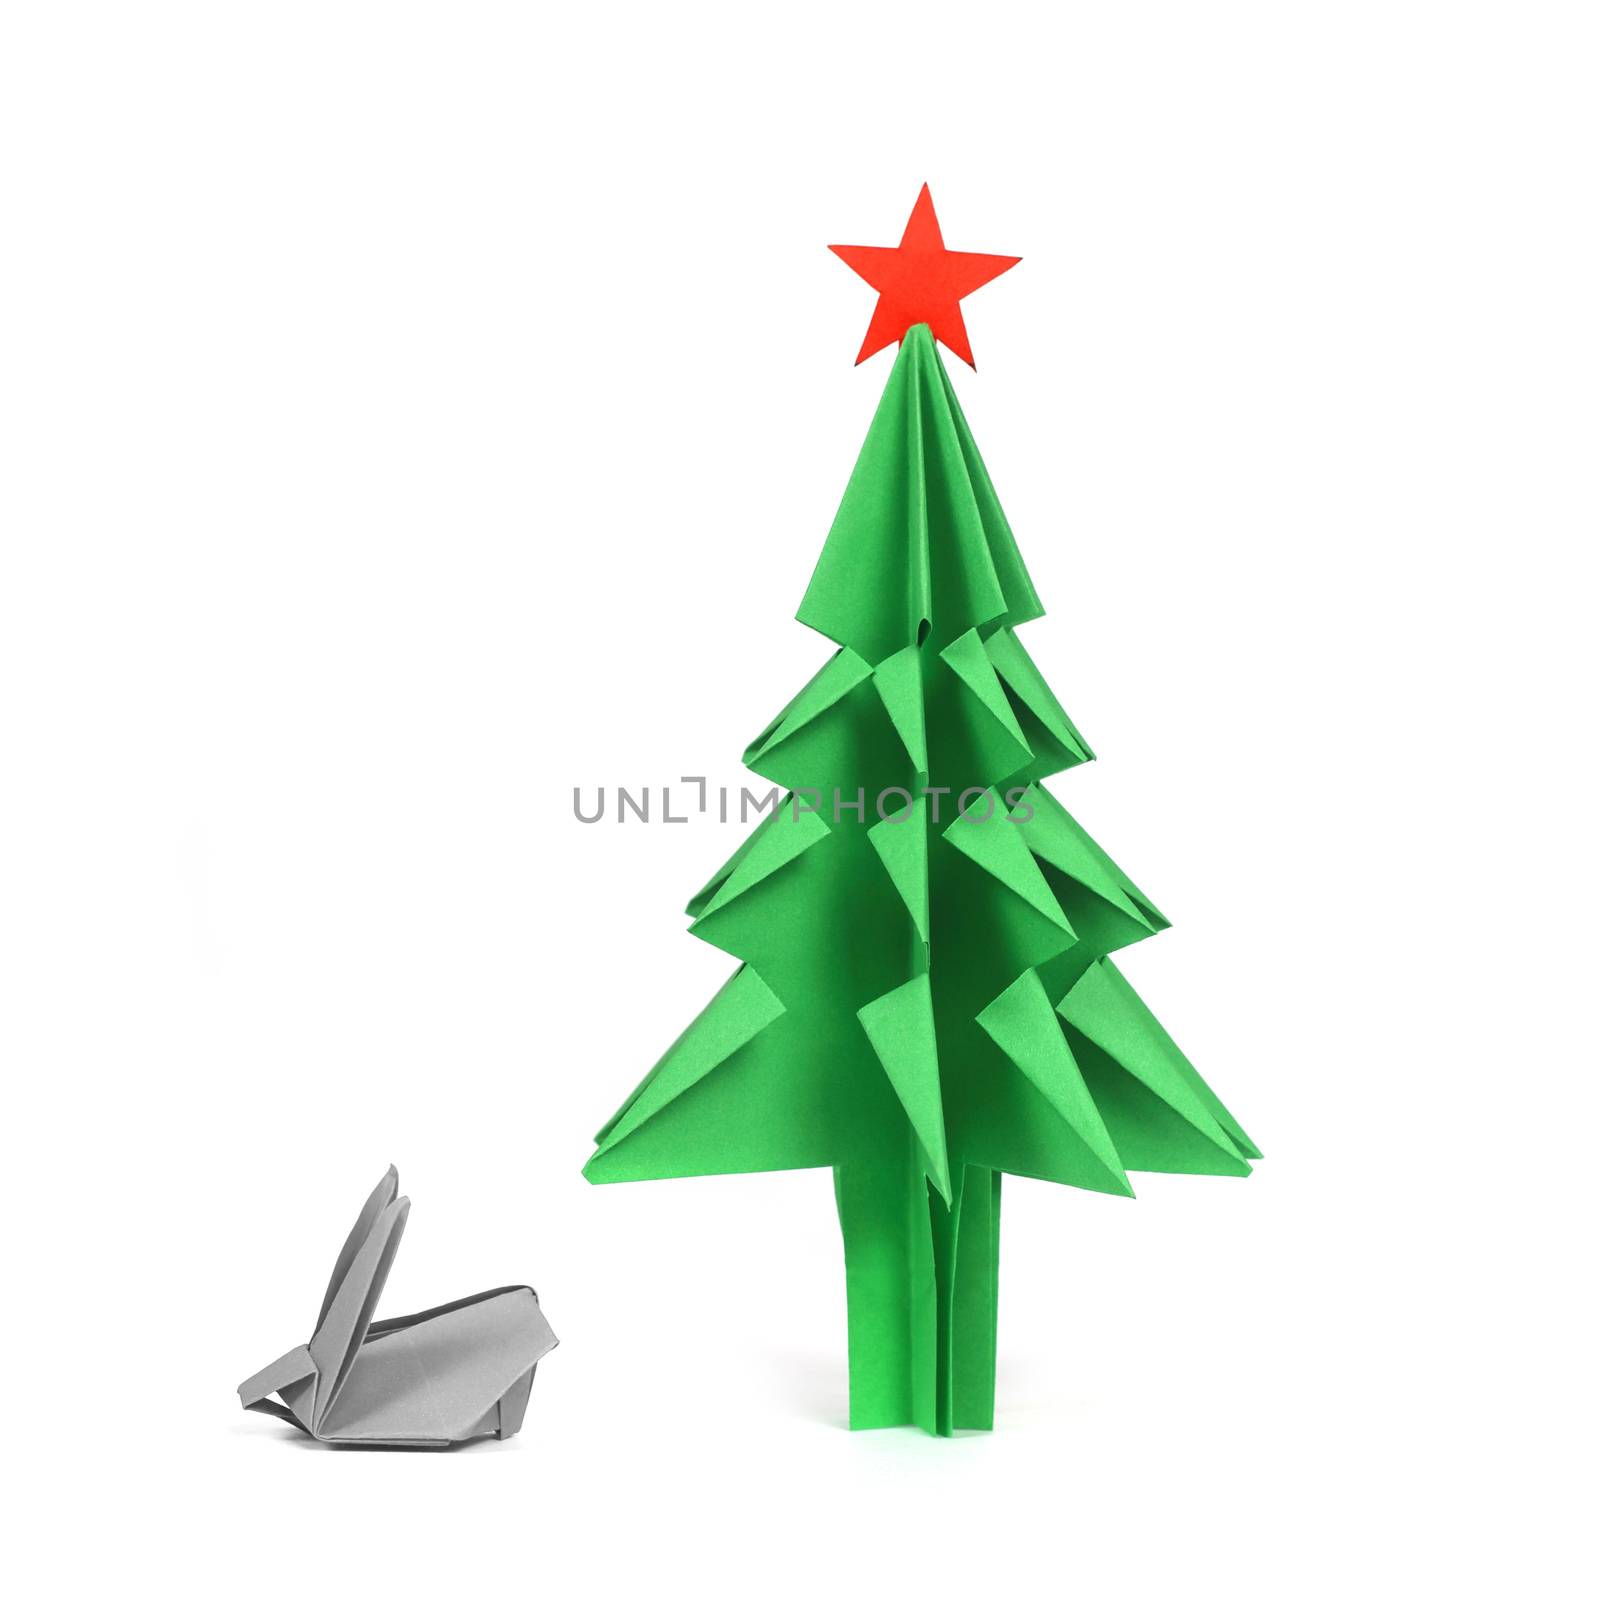 Origami Christmas tree by destillat